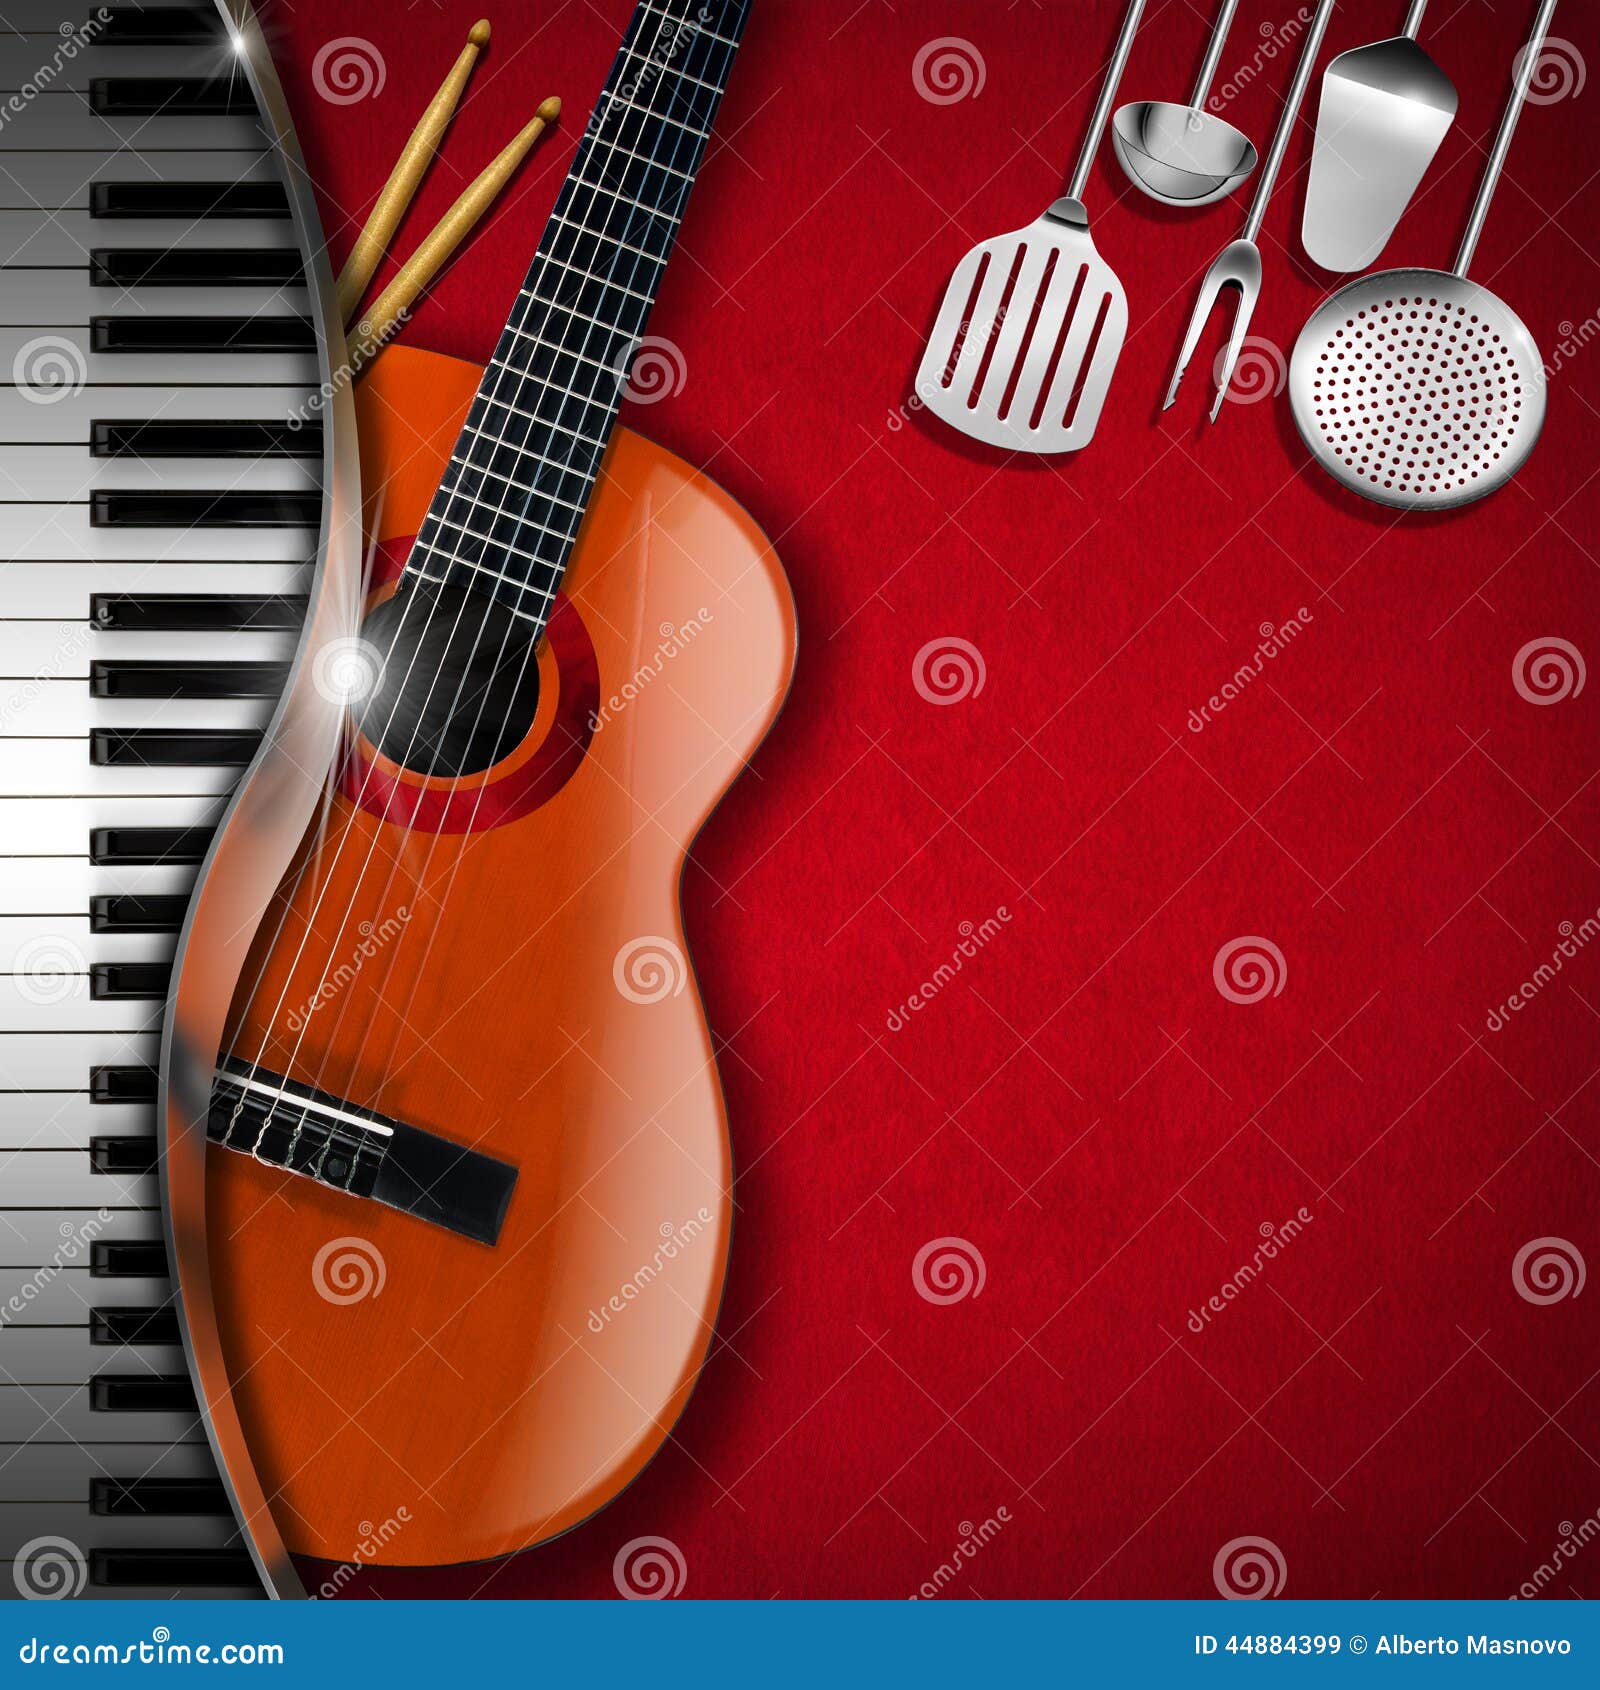 Music and Food - Menu Design Stock Illustration - Illustration of keyboard,  food: 44884399